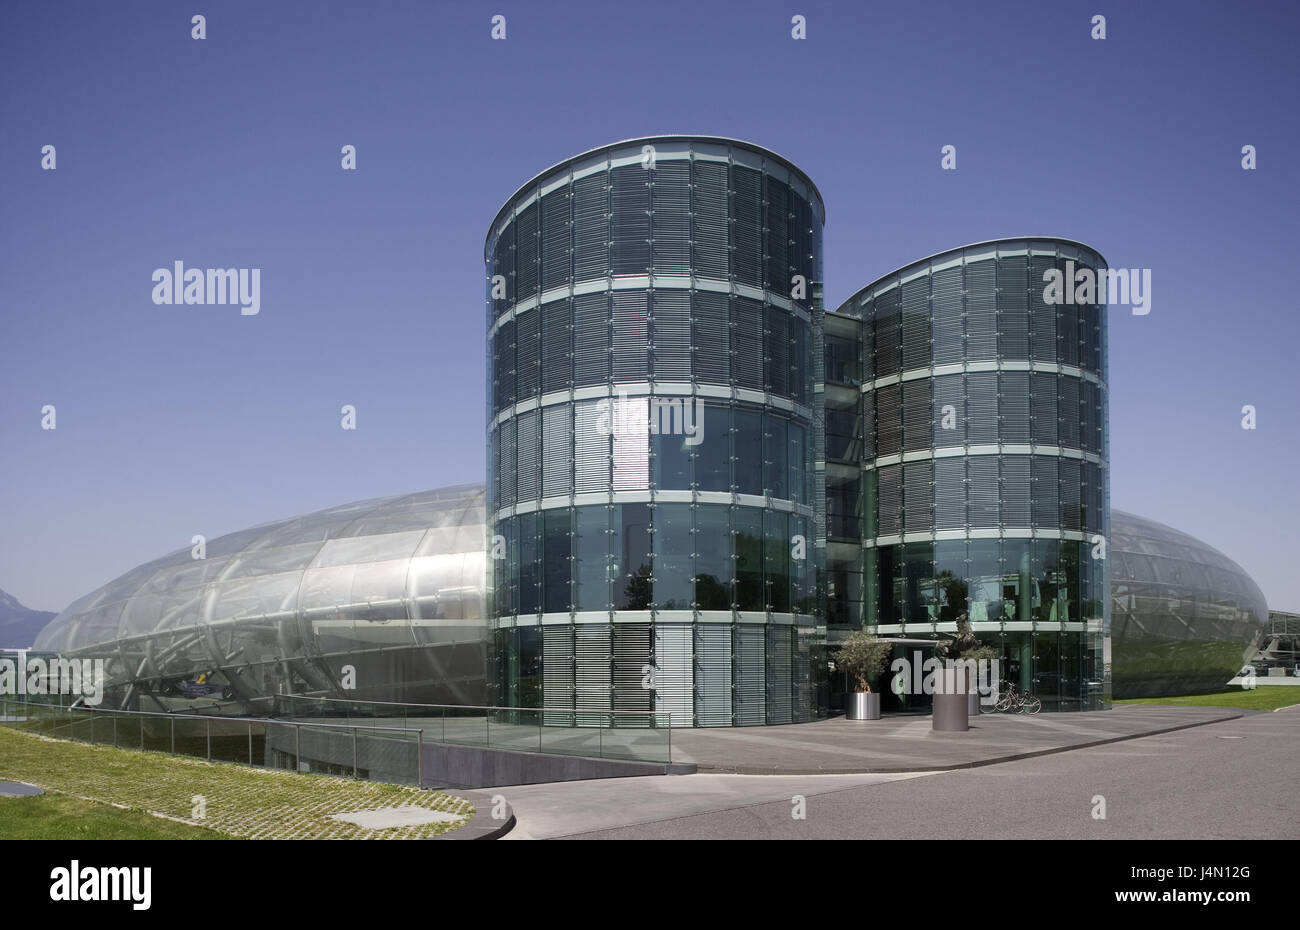 Austria, Salzburg, hangar 7, museum, venue, town, building, structure, hangar, architecture, modern, glass, steel, airport grounds, outside, Stock Photo